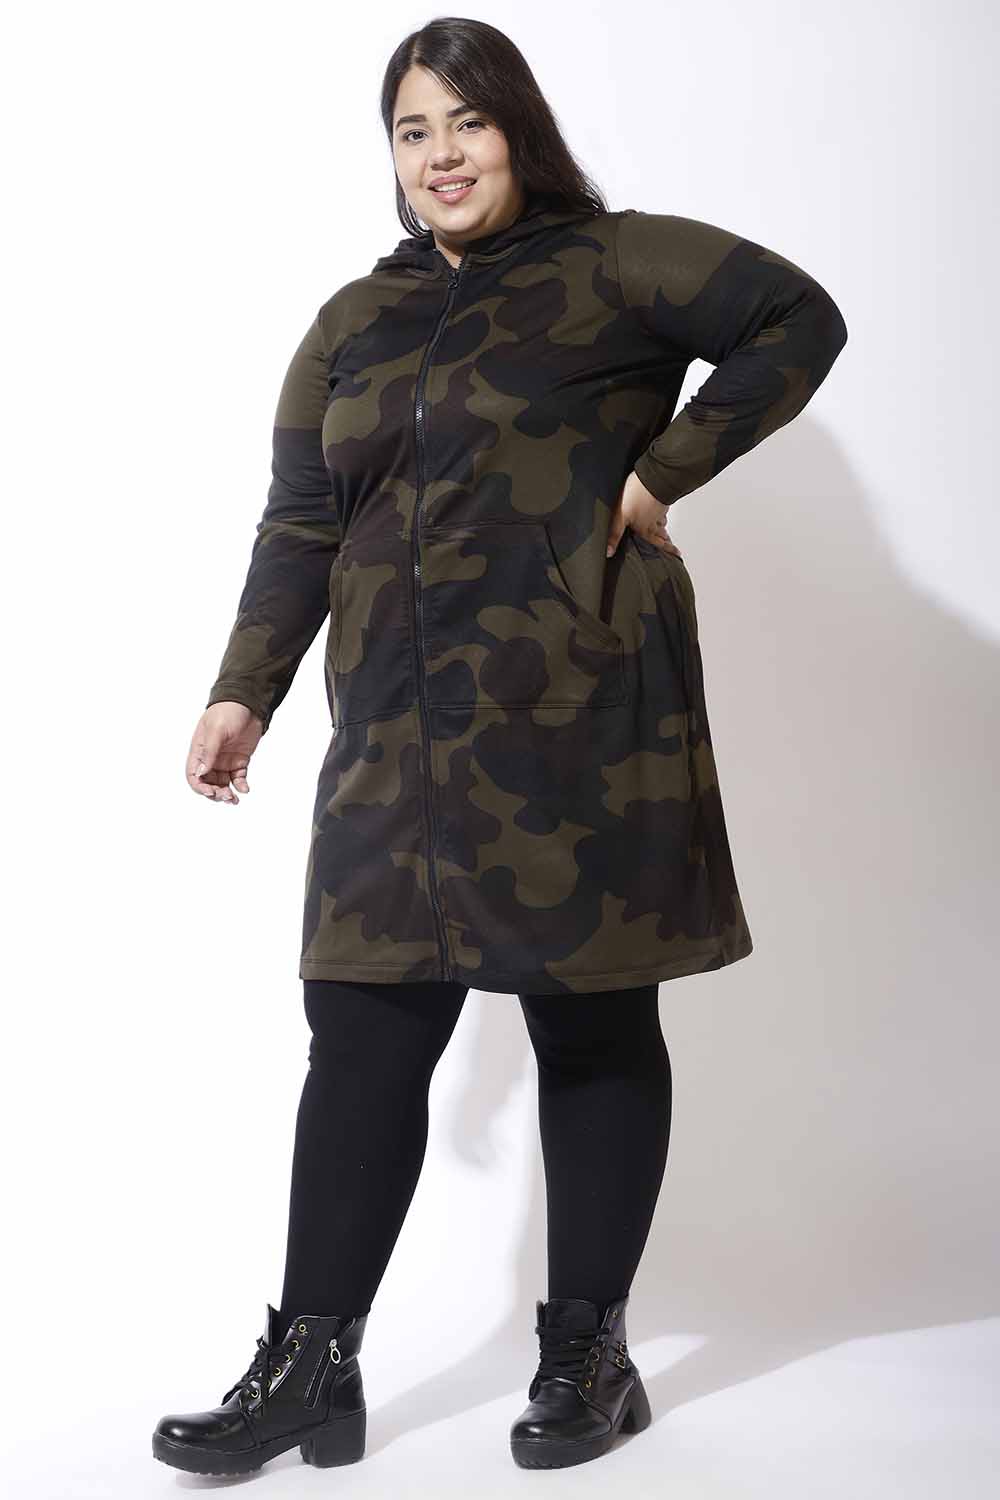 Olive Camouflage Jacket Dress for Women